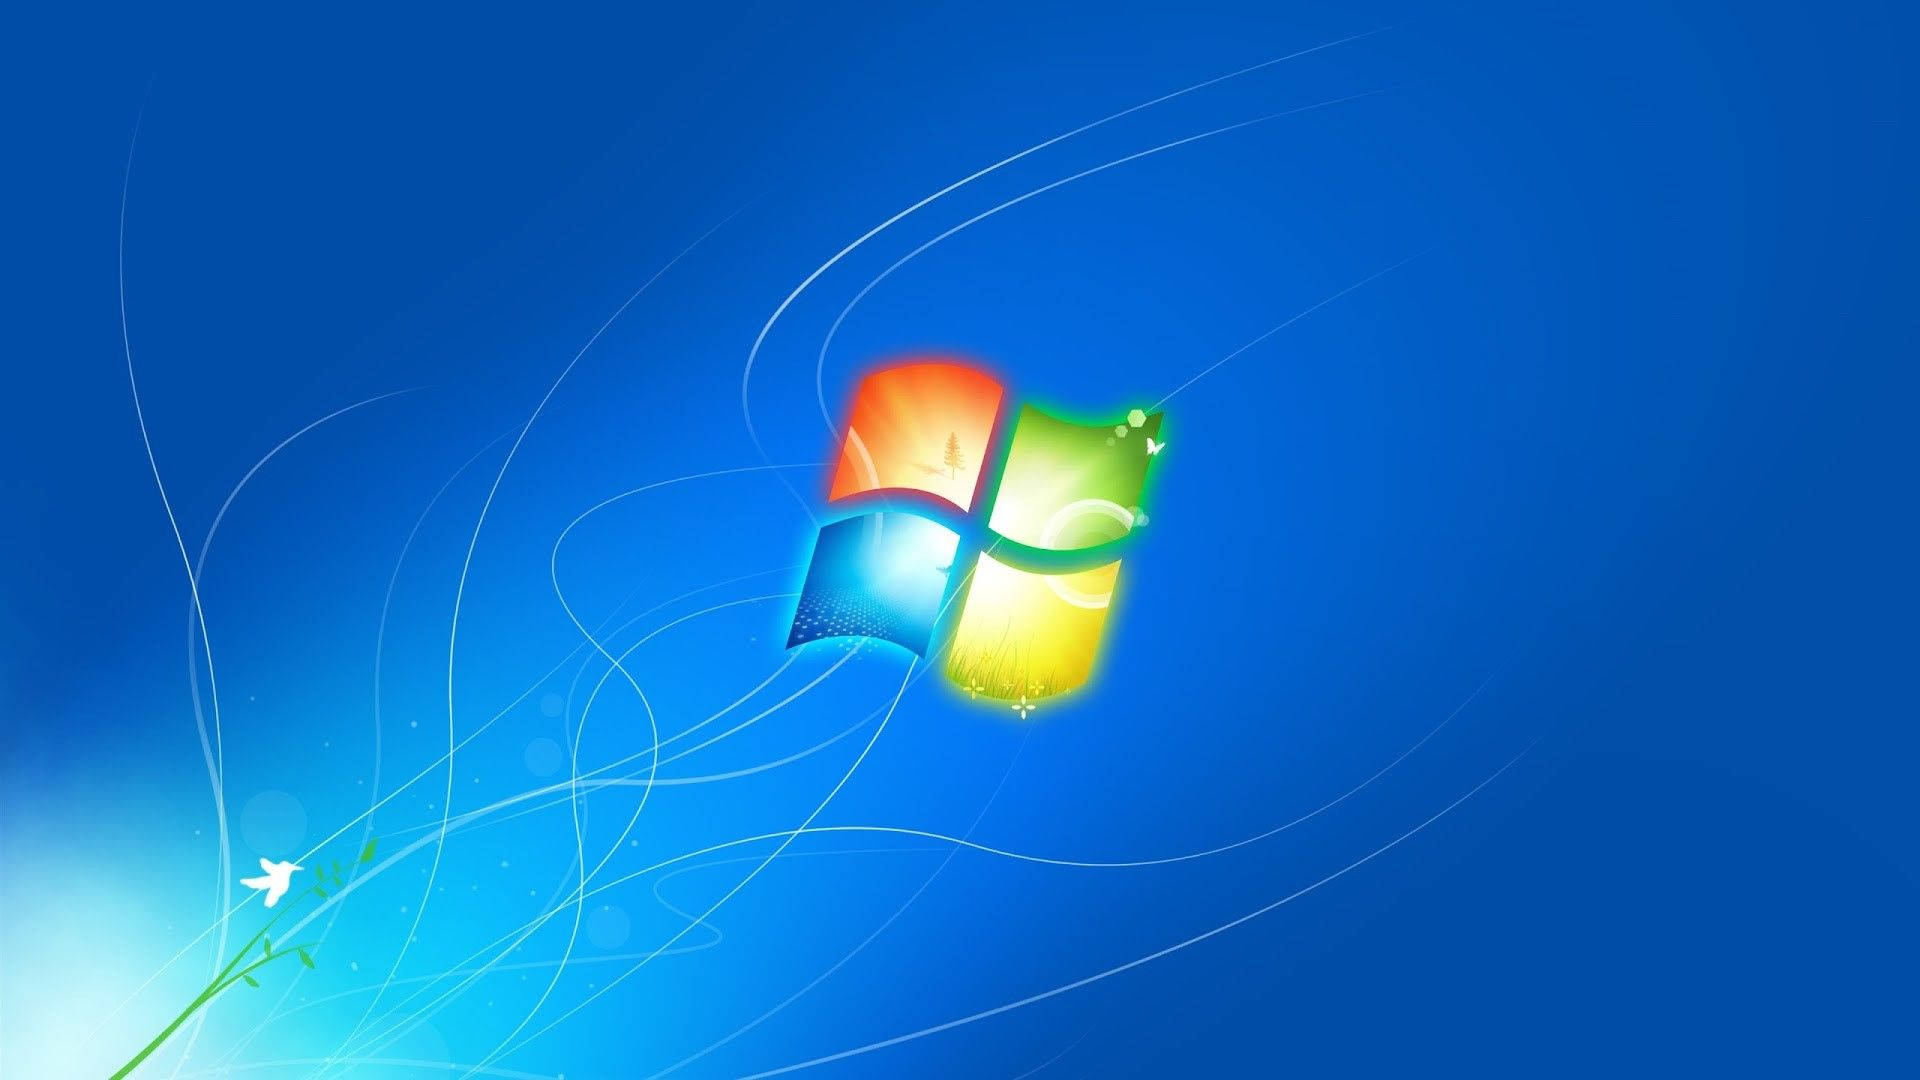 Blue Windows 7 Screen